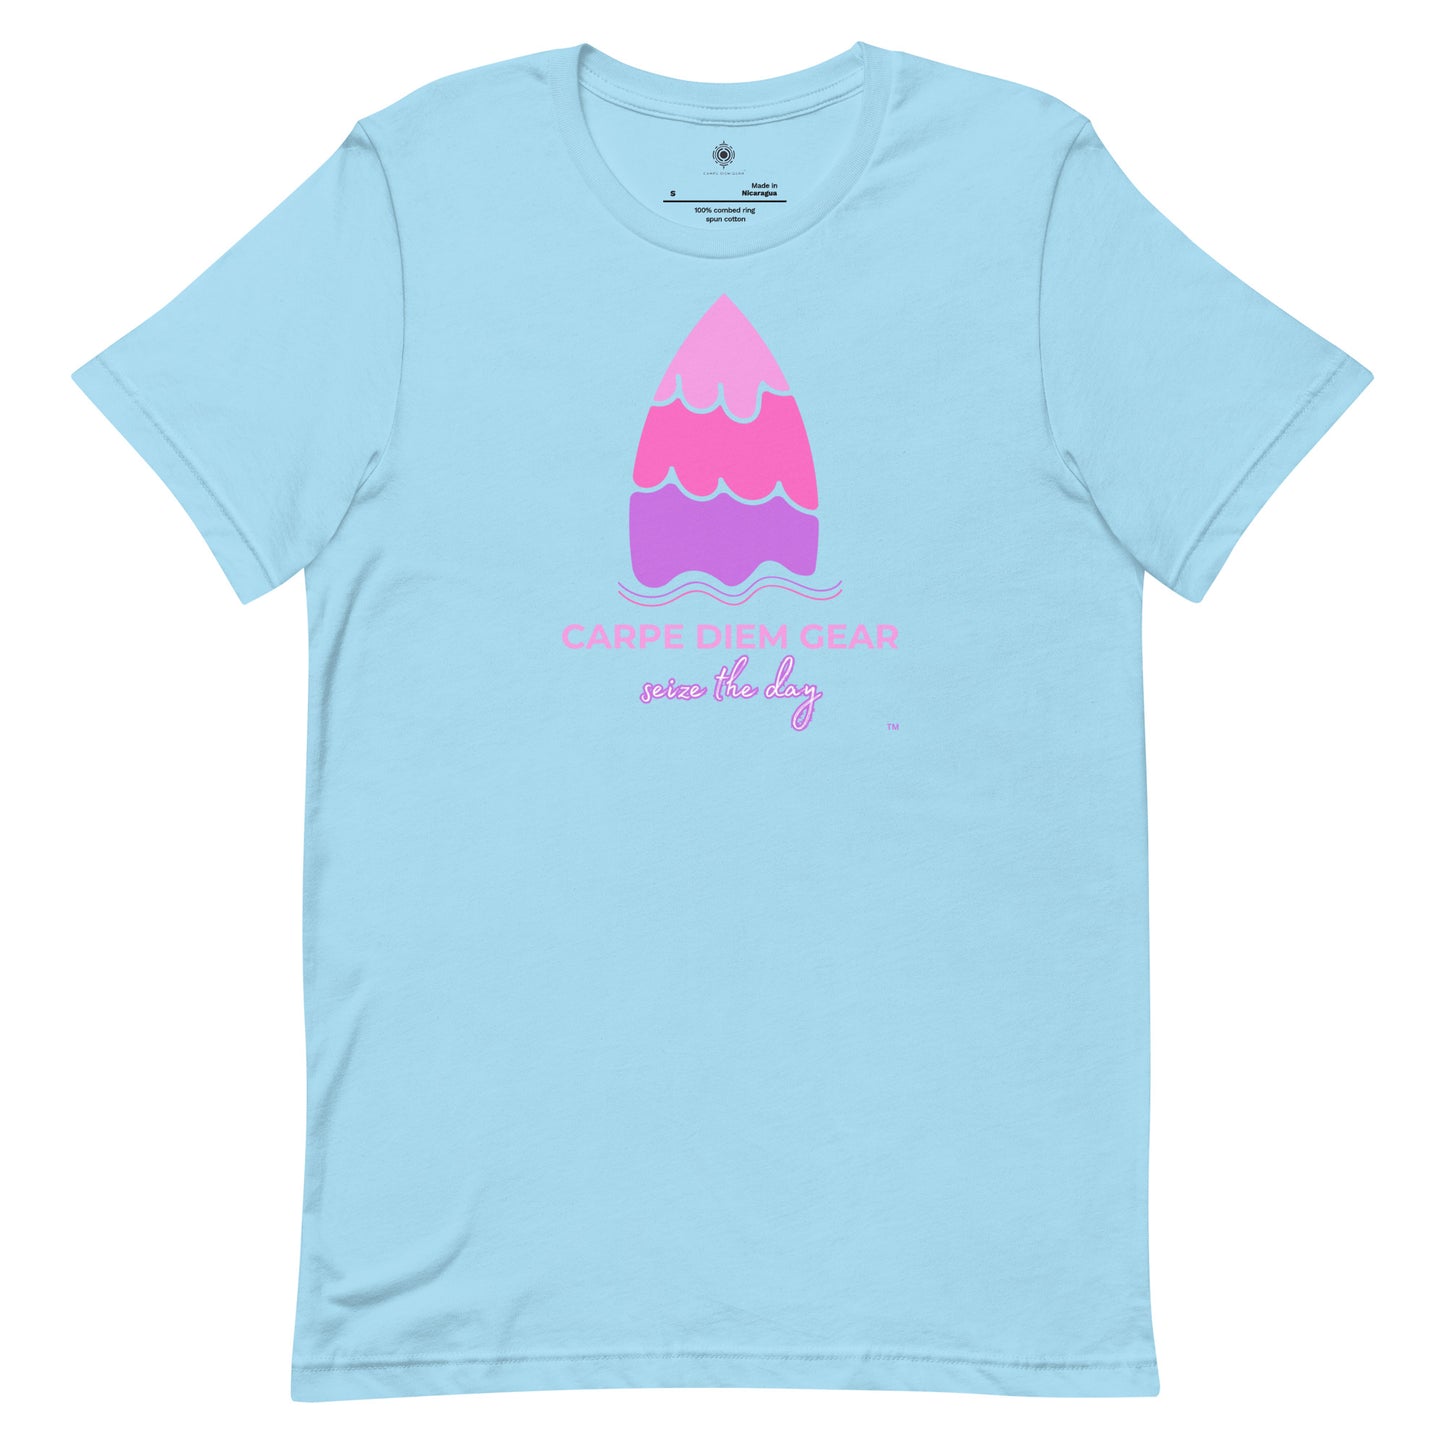 Carpe Diem Gear | Surf's Up | Pink Surfboard | Unisex 100% Cotton T-Shirt